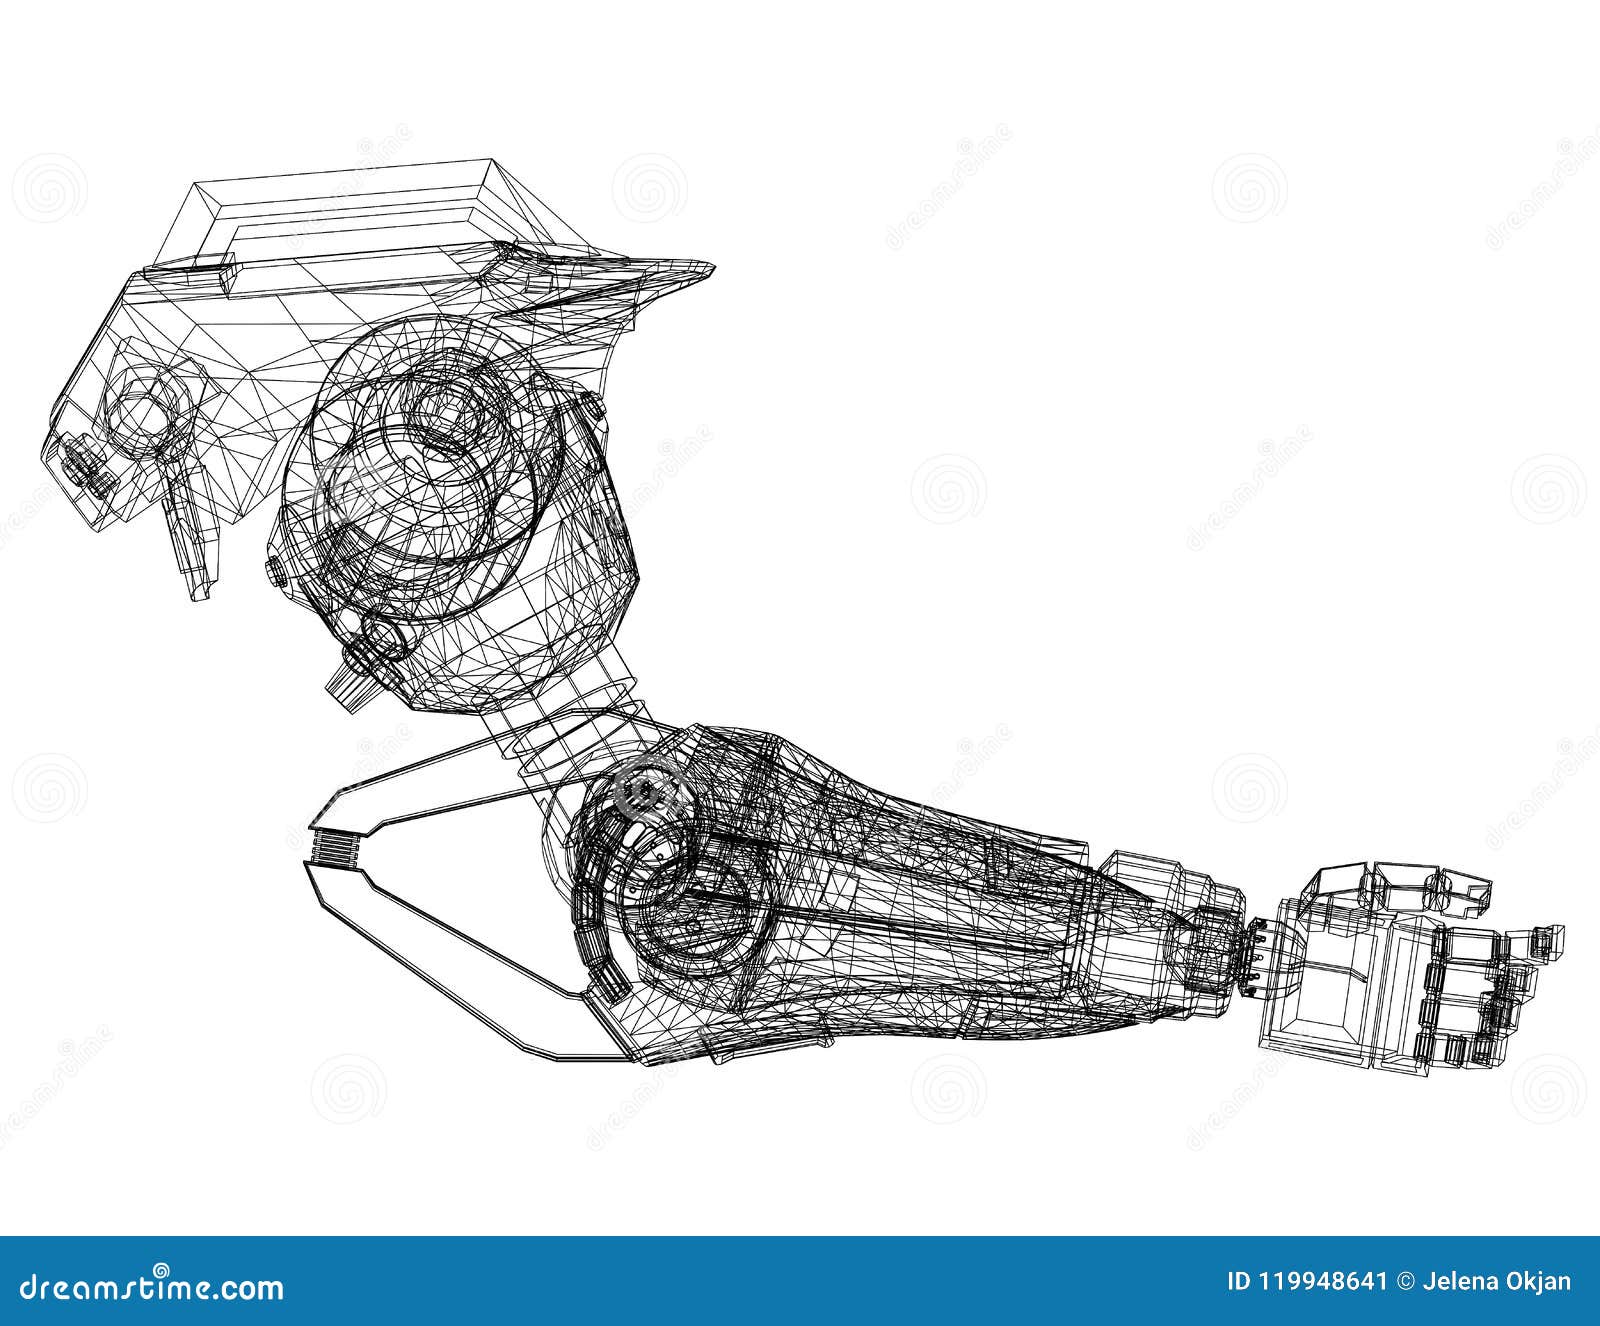 robot arm design part 1 by sinms on DeviantArt